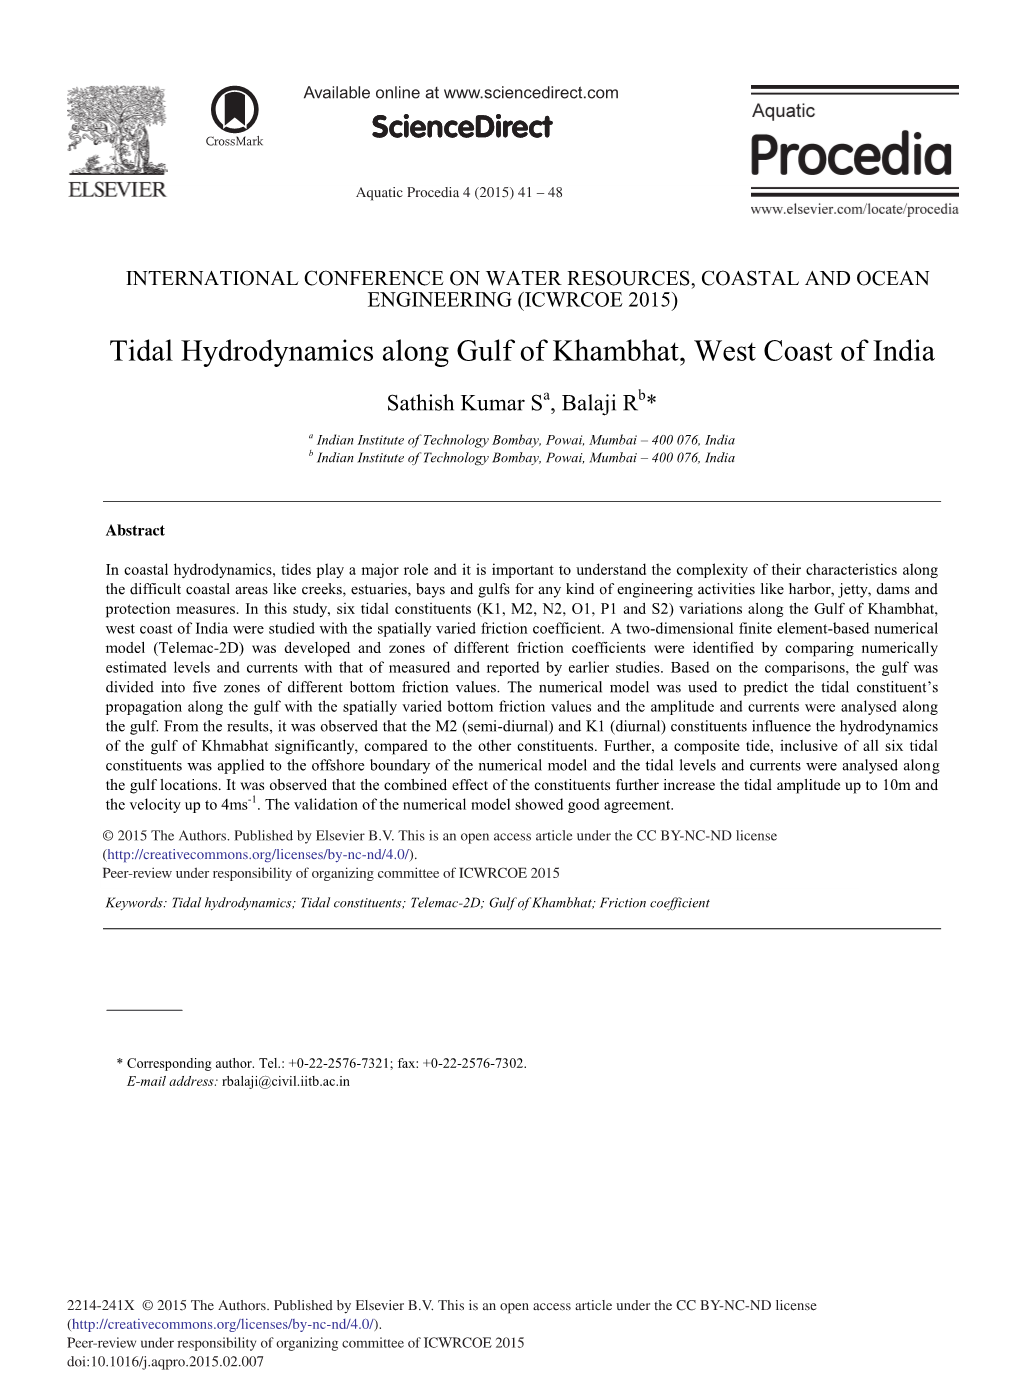 Tidal Hydrodynamics Along Gulf of Khambhat, West Coast of India